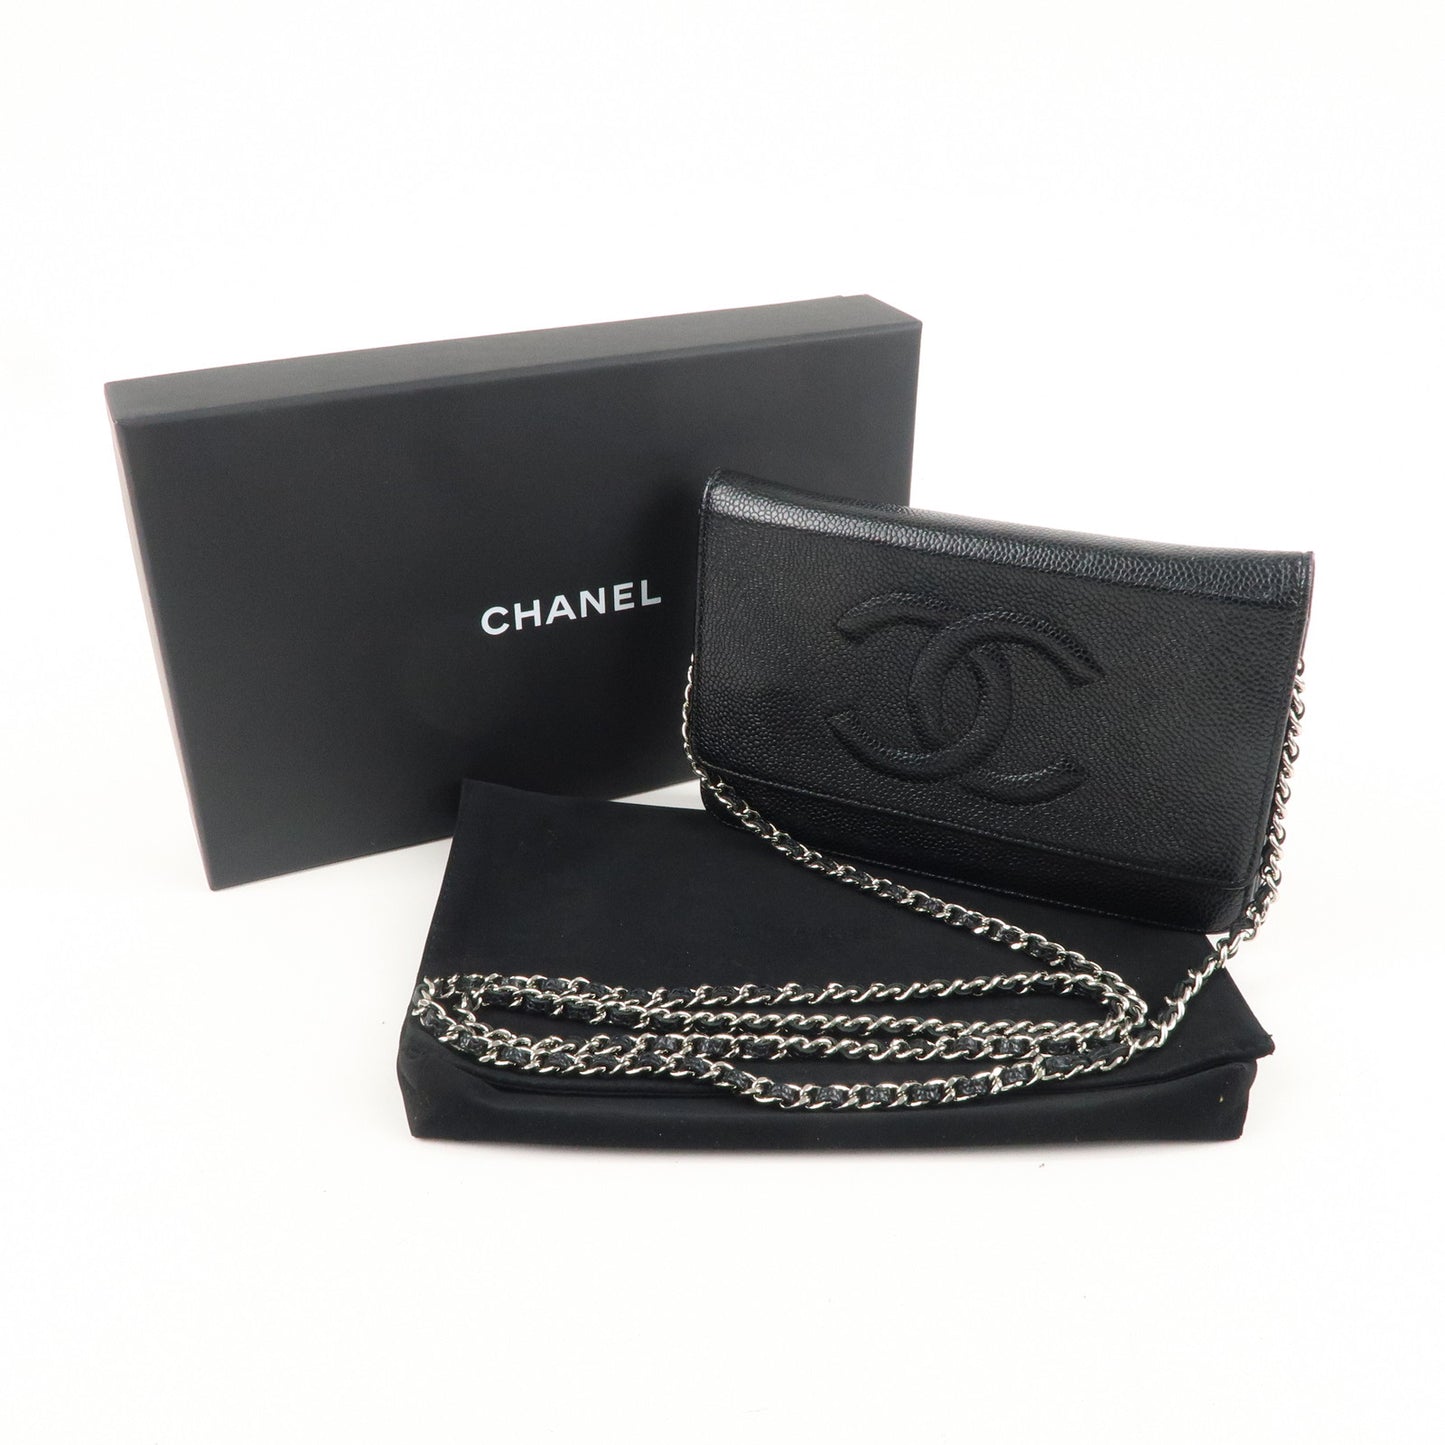 CHANEL Coco Mark Caviar Skin Chain Wallet WOC Black A48654